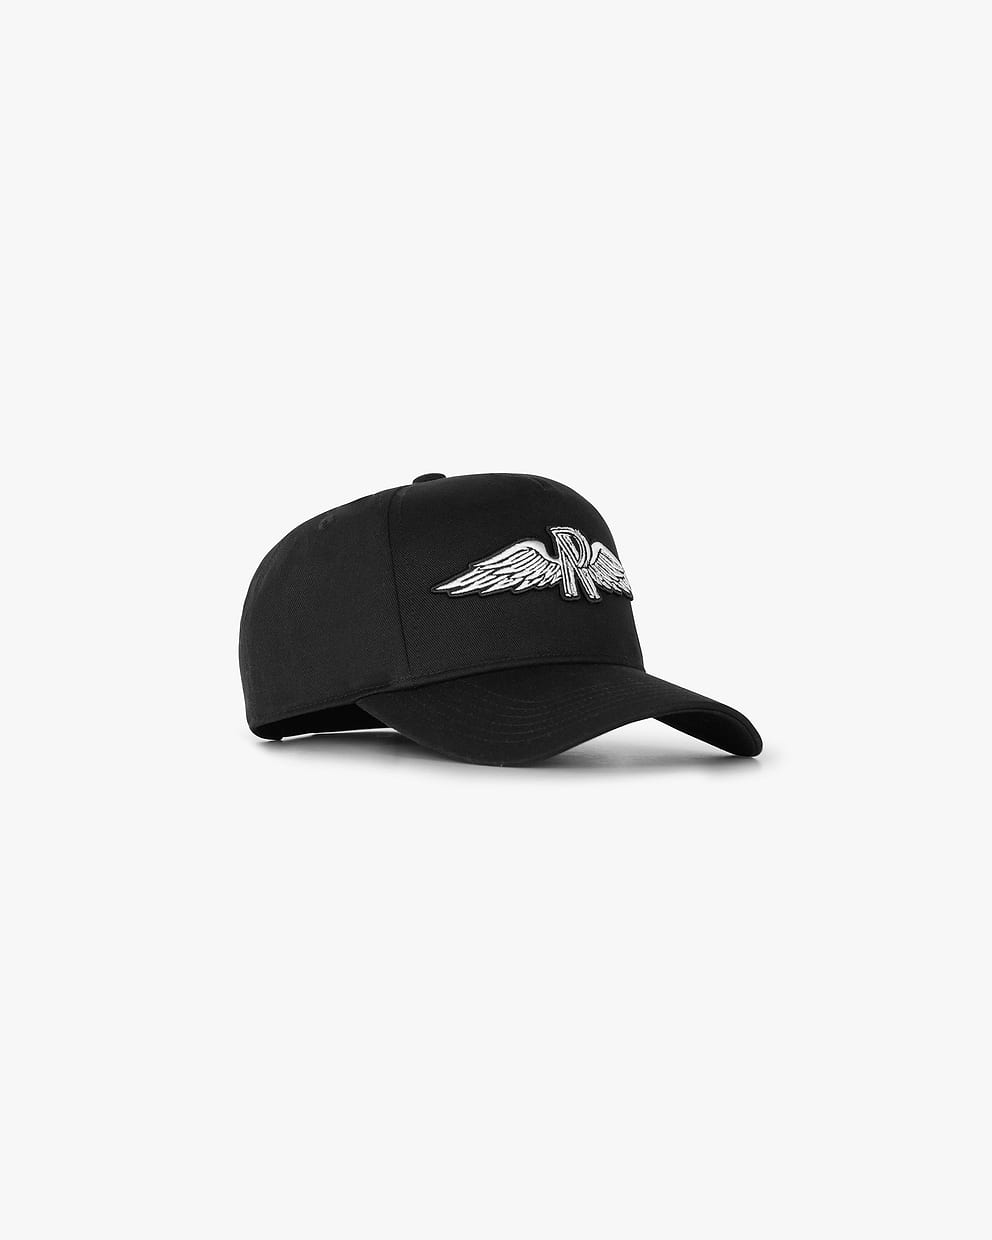 Represent Initial Winged Cap - Black